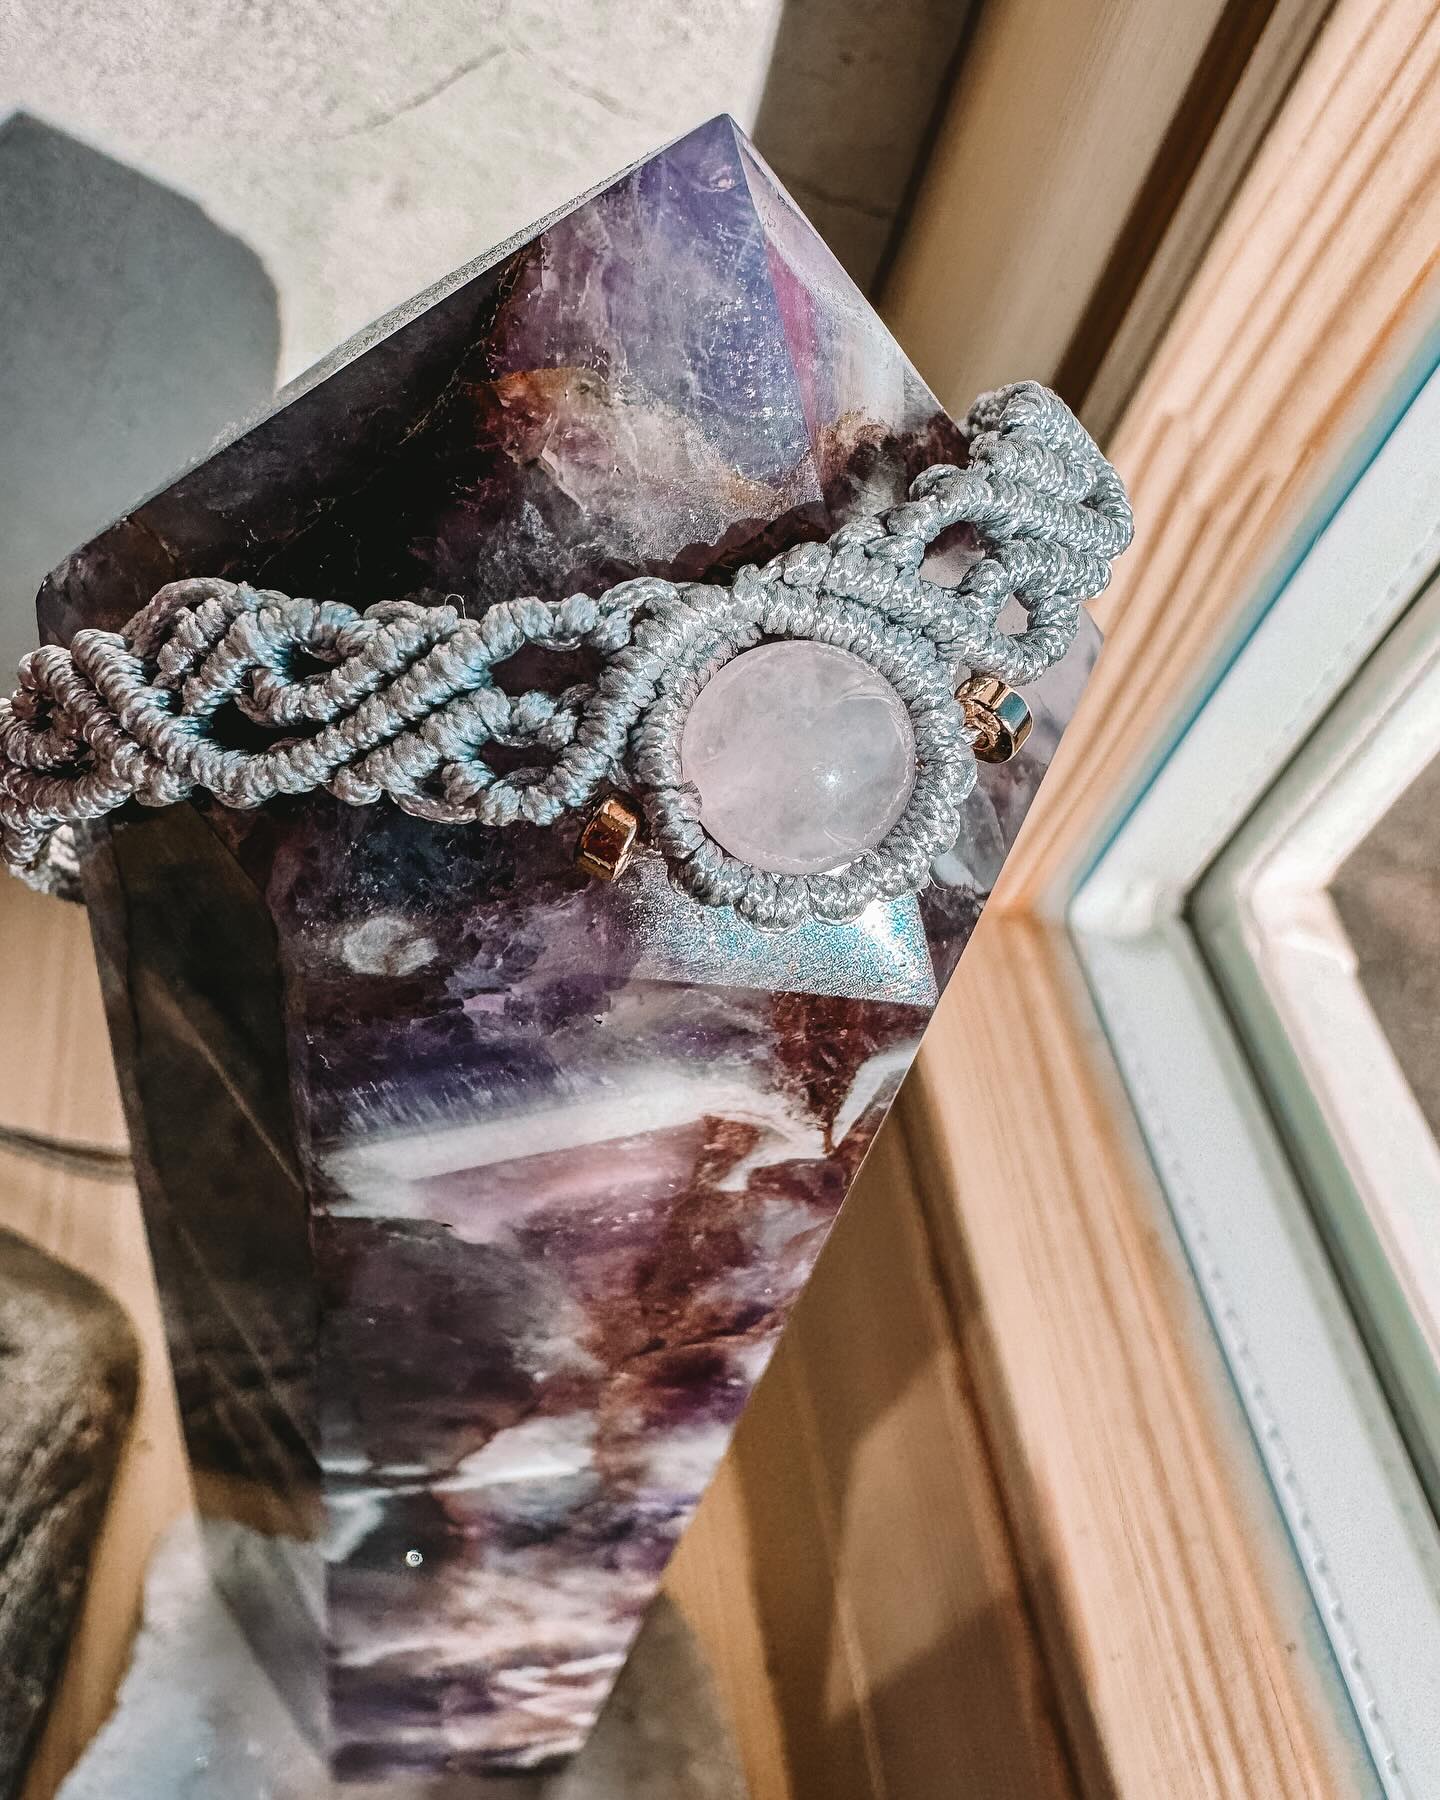 Macrame necklace with Rose quartz